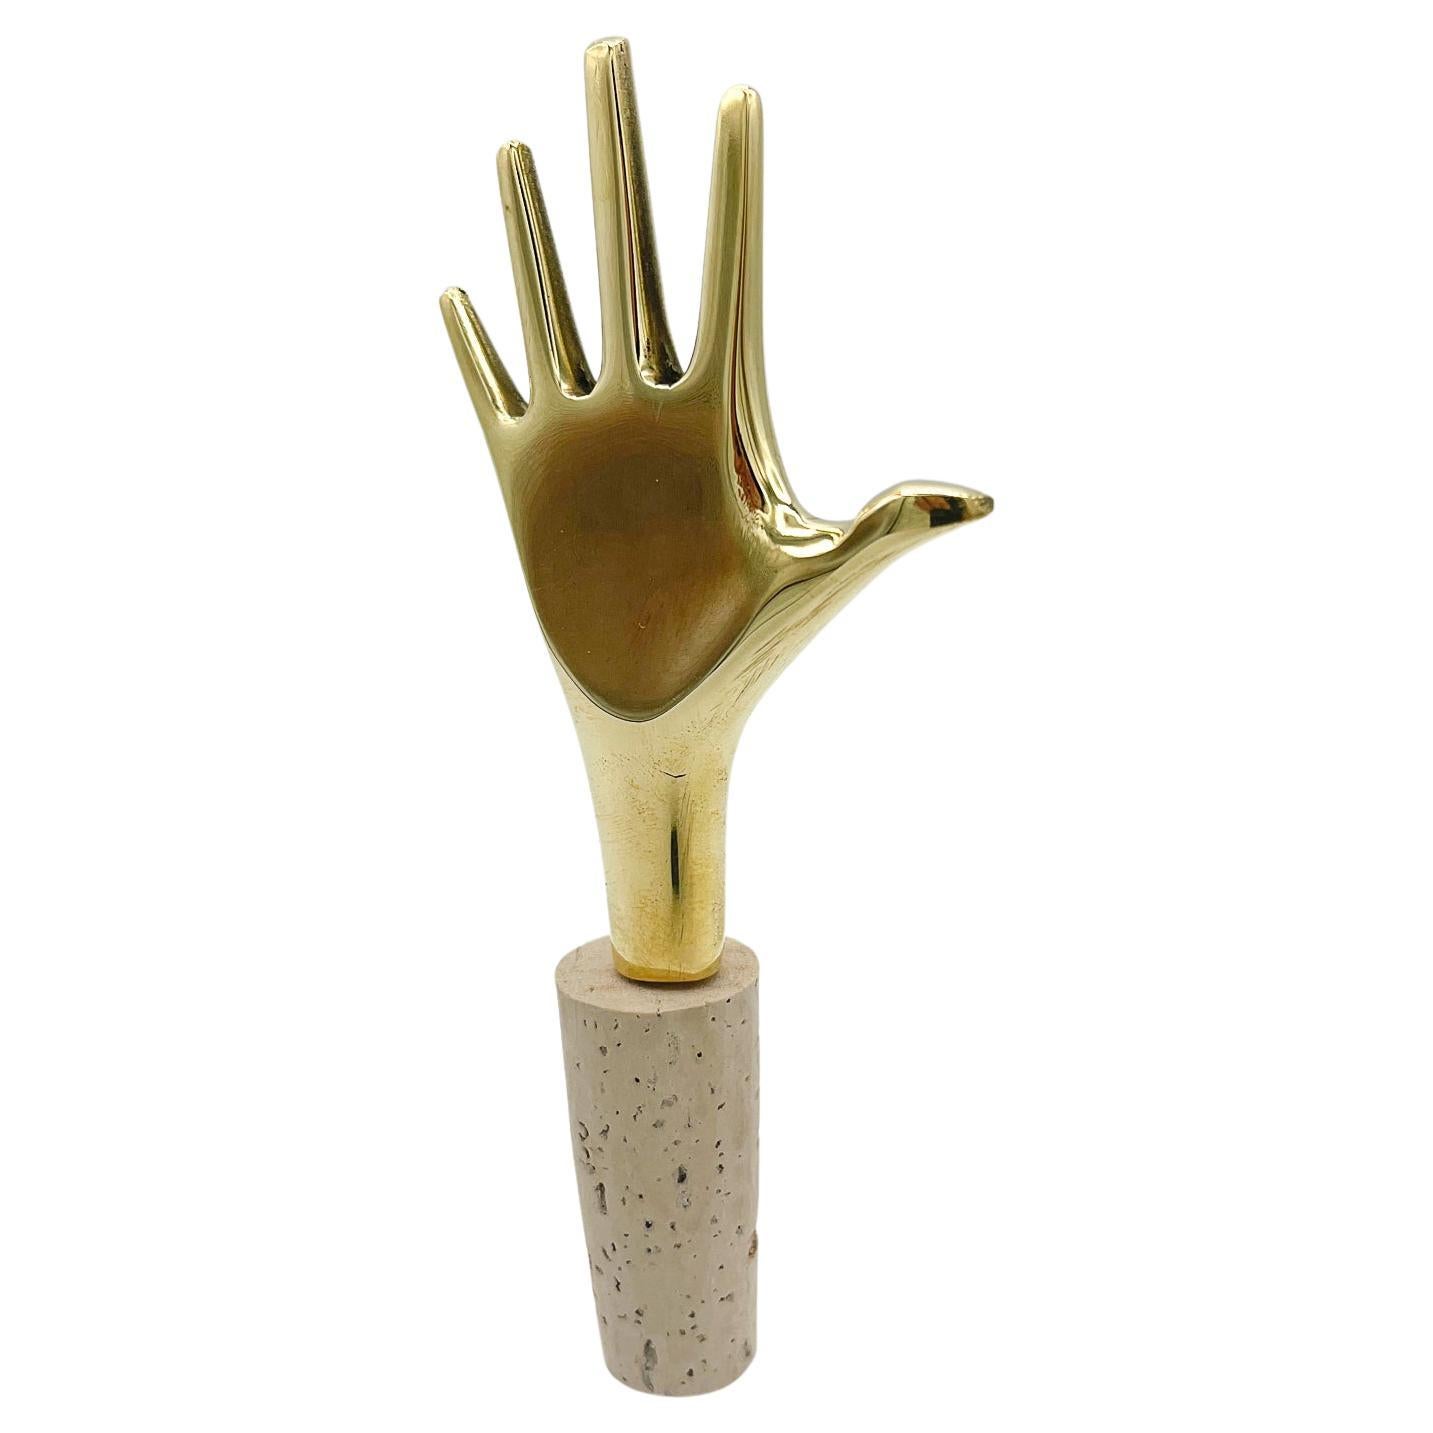 Carl Aubock "Wrist" Hand Cork Stopper #4220